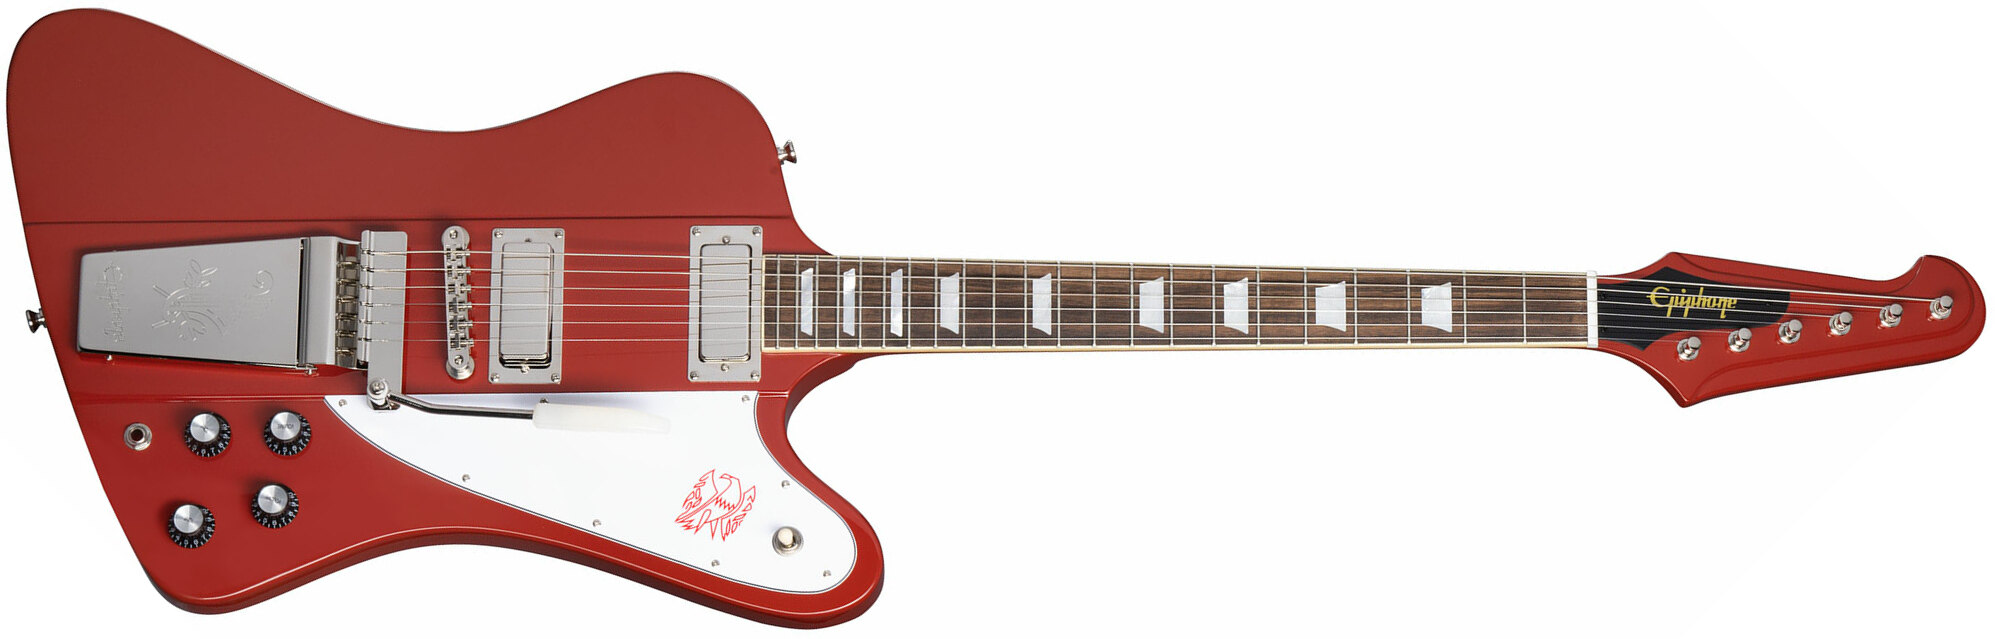 Epiphone Firebird V 1963 Maestro Vibrola Inspired By Gibson Custom 2mh Trem Lau - Ember Red - Retro-rock elektrische gitaar - Main picture